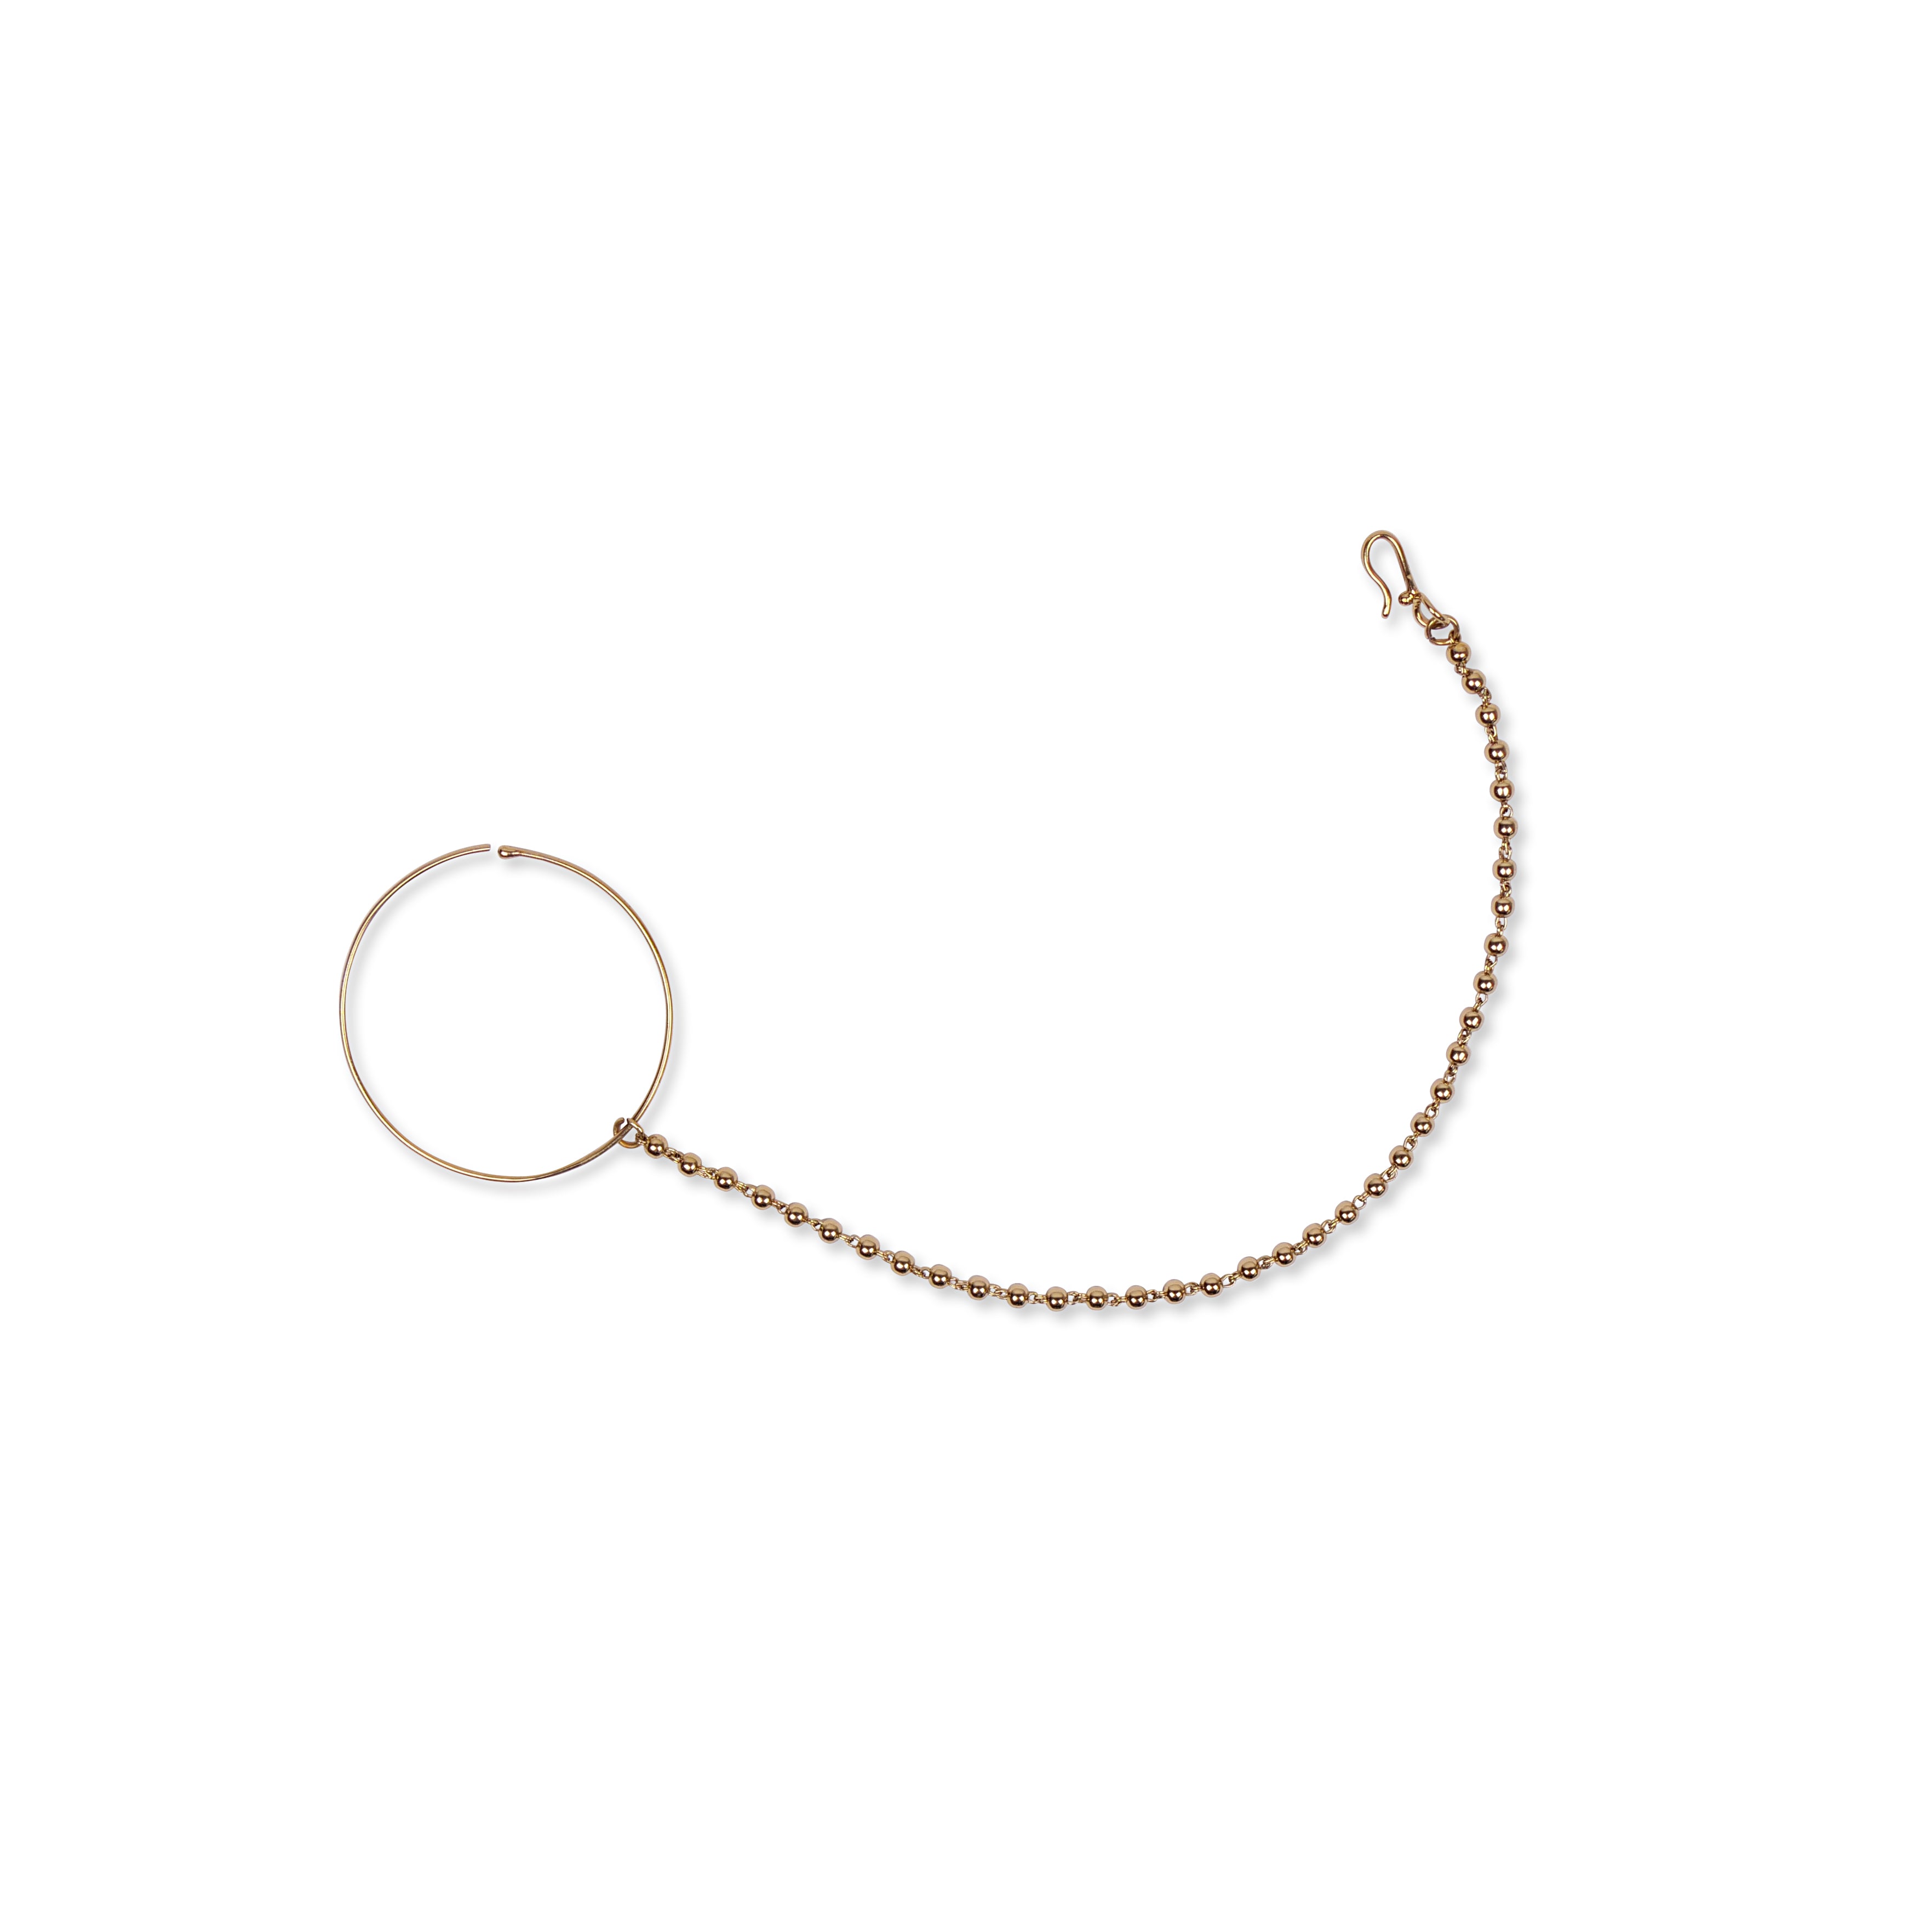 1.5" Plain Bridal Nose Ring in Antique Gold